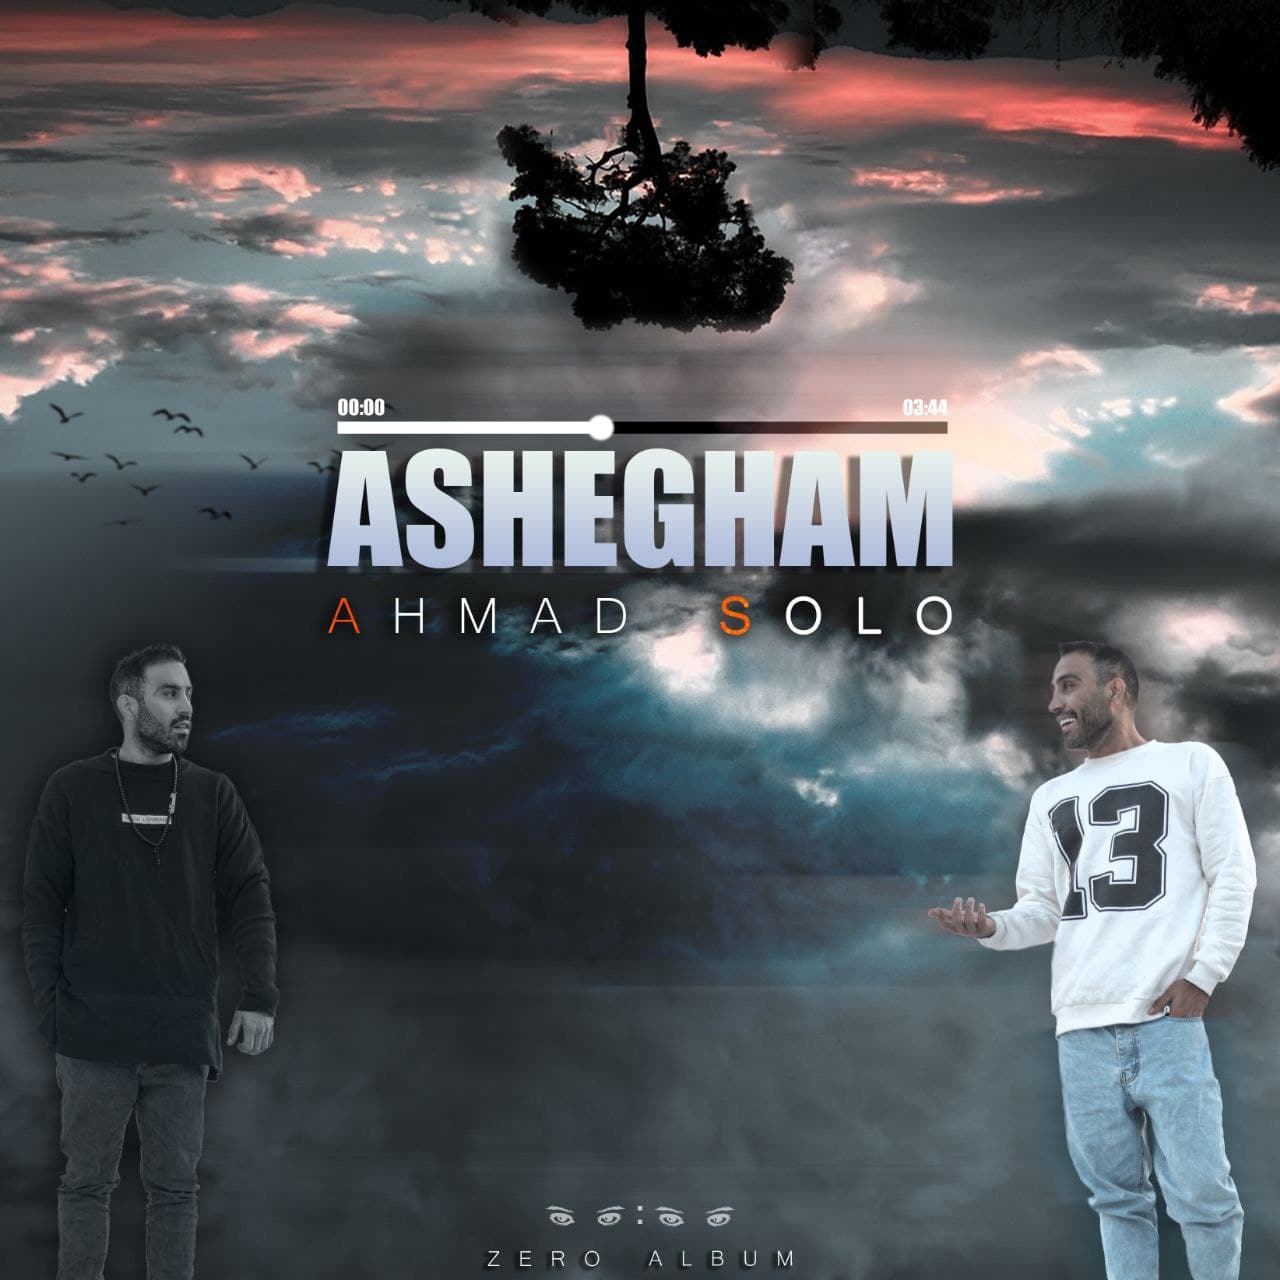  دانلود آهنگ جدید احمد سلو - عاشقم | Download New Music By Ahmad Solo - Ashegham